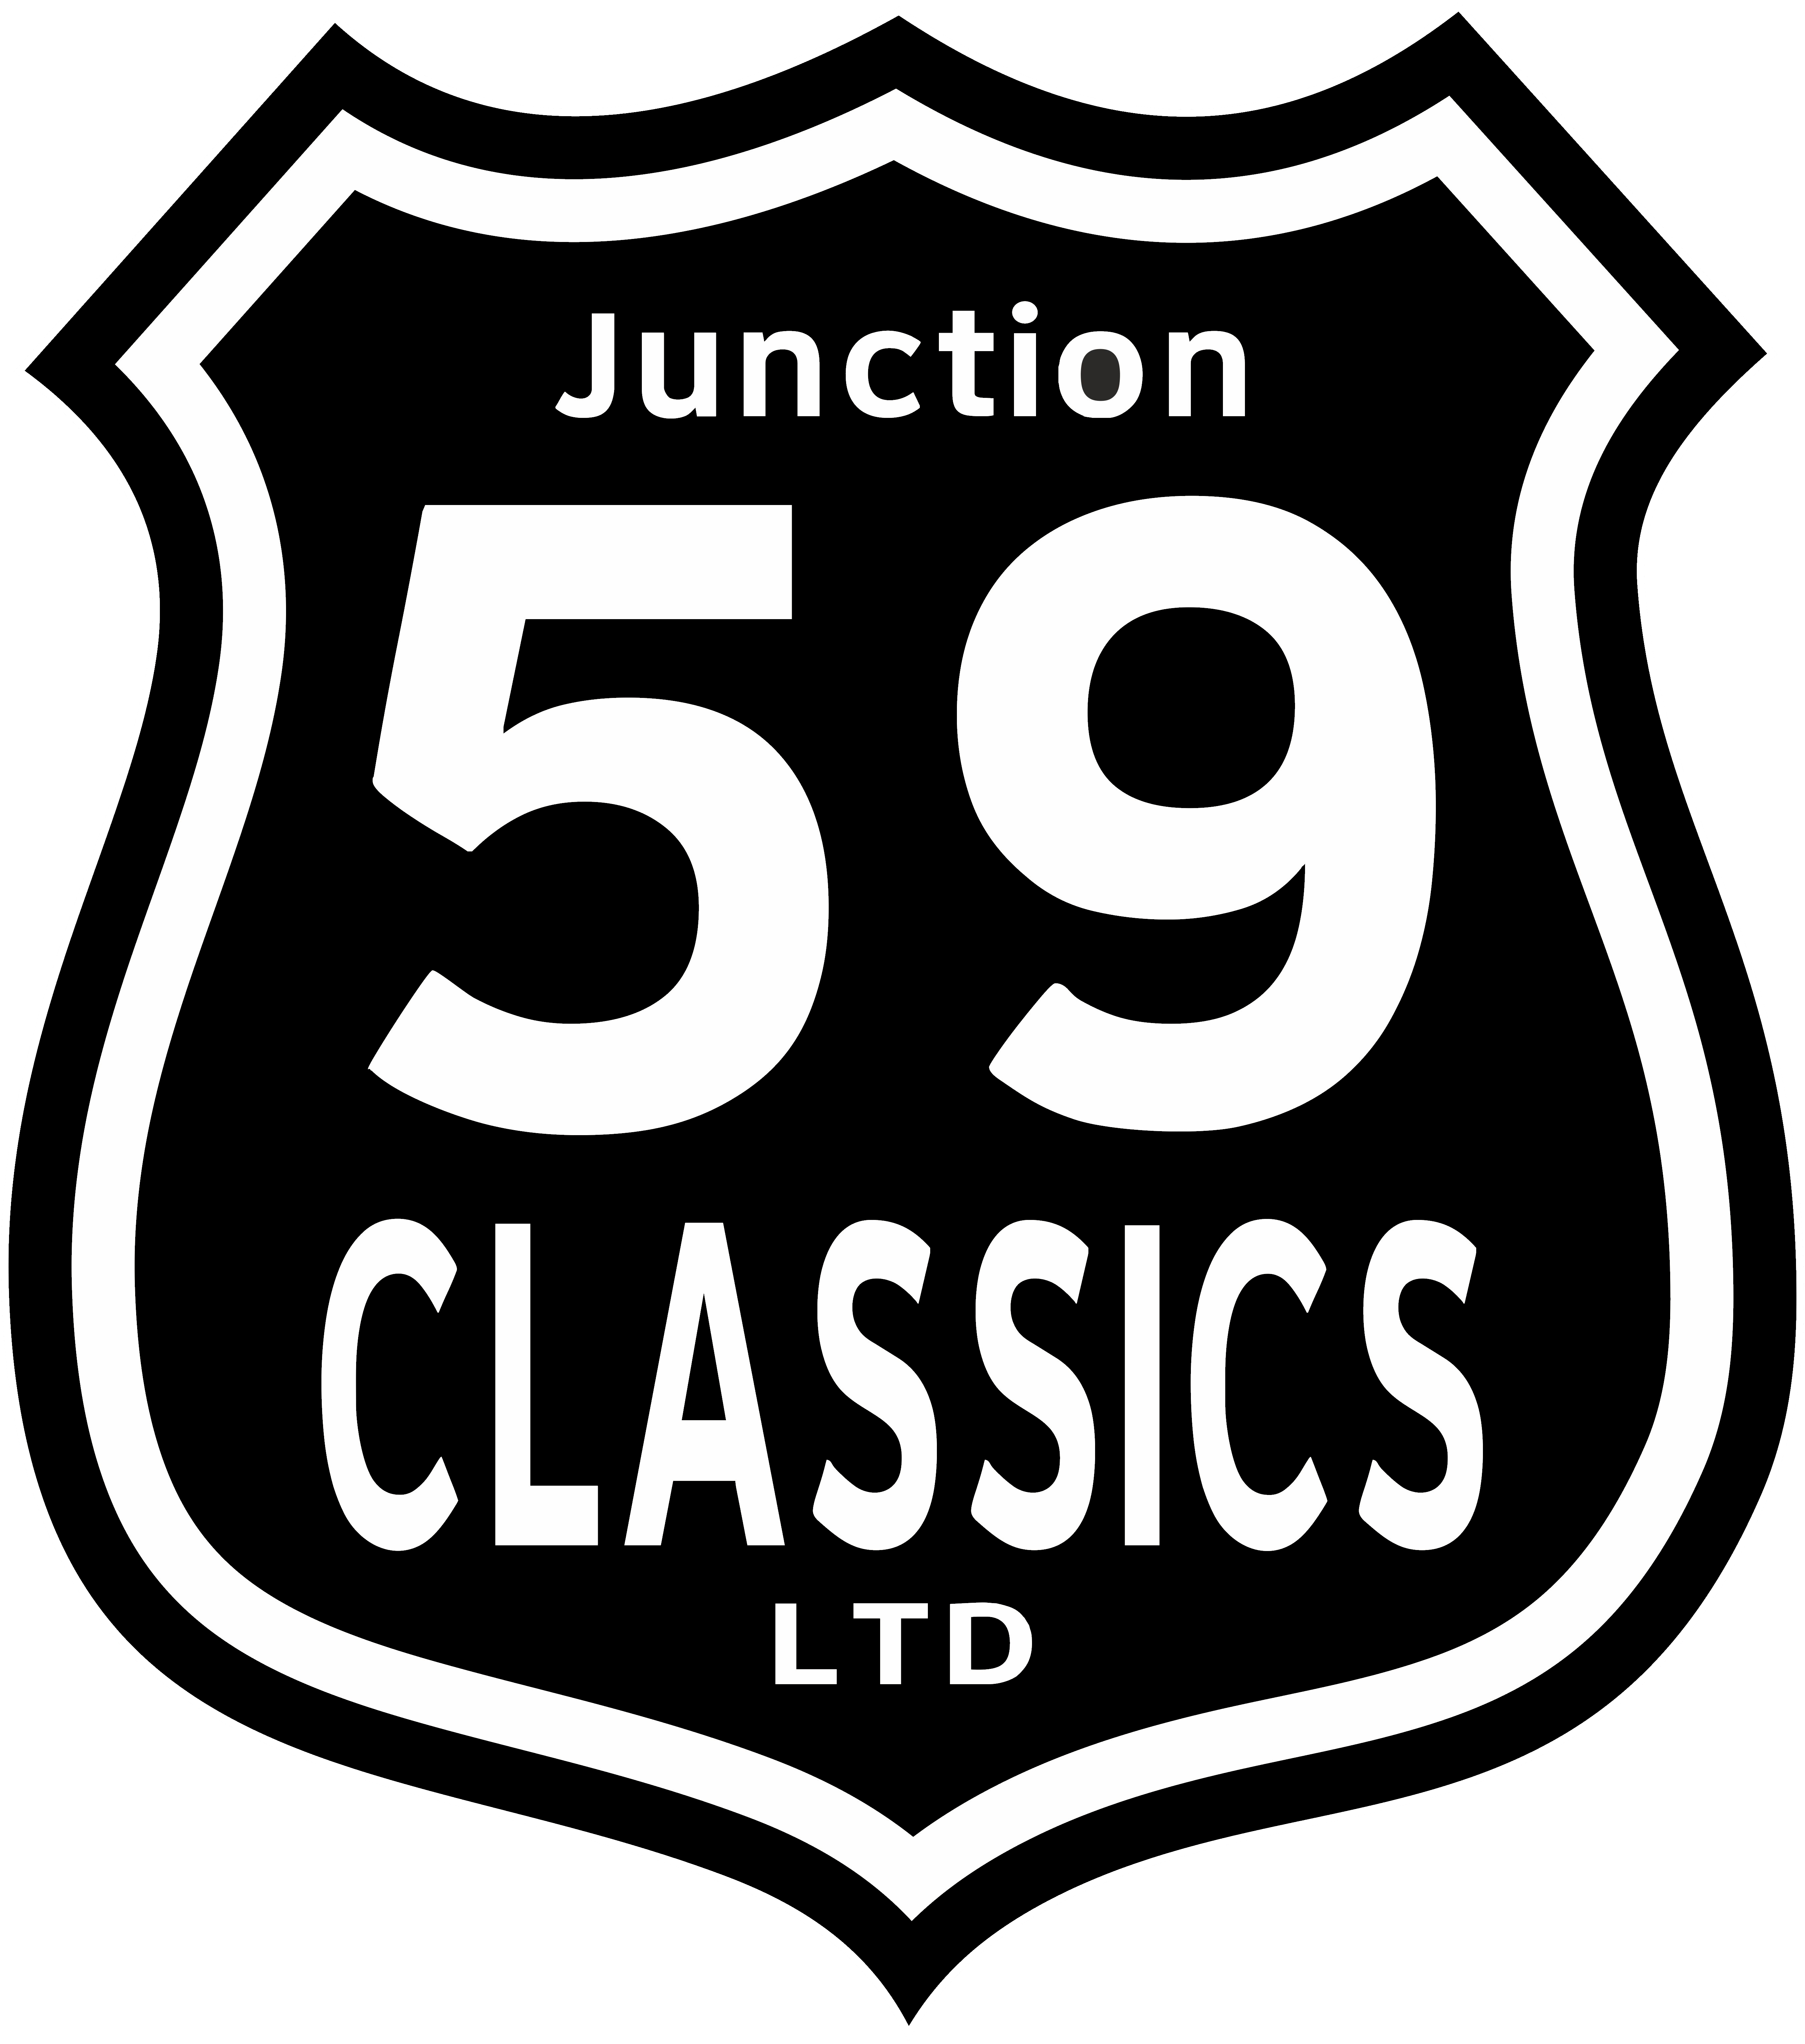 Junction 59 Classics Ltd logo